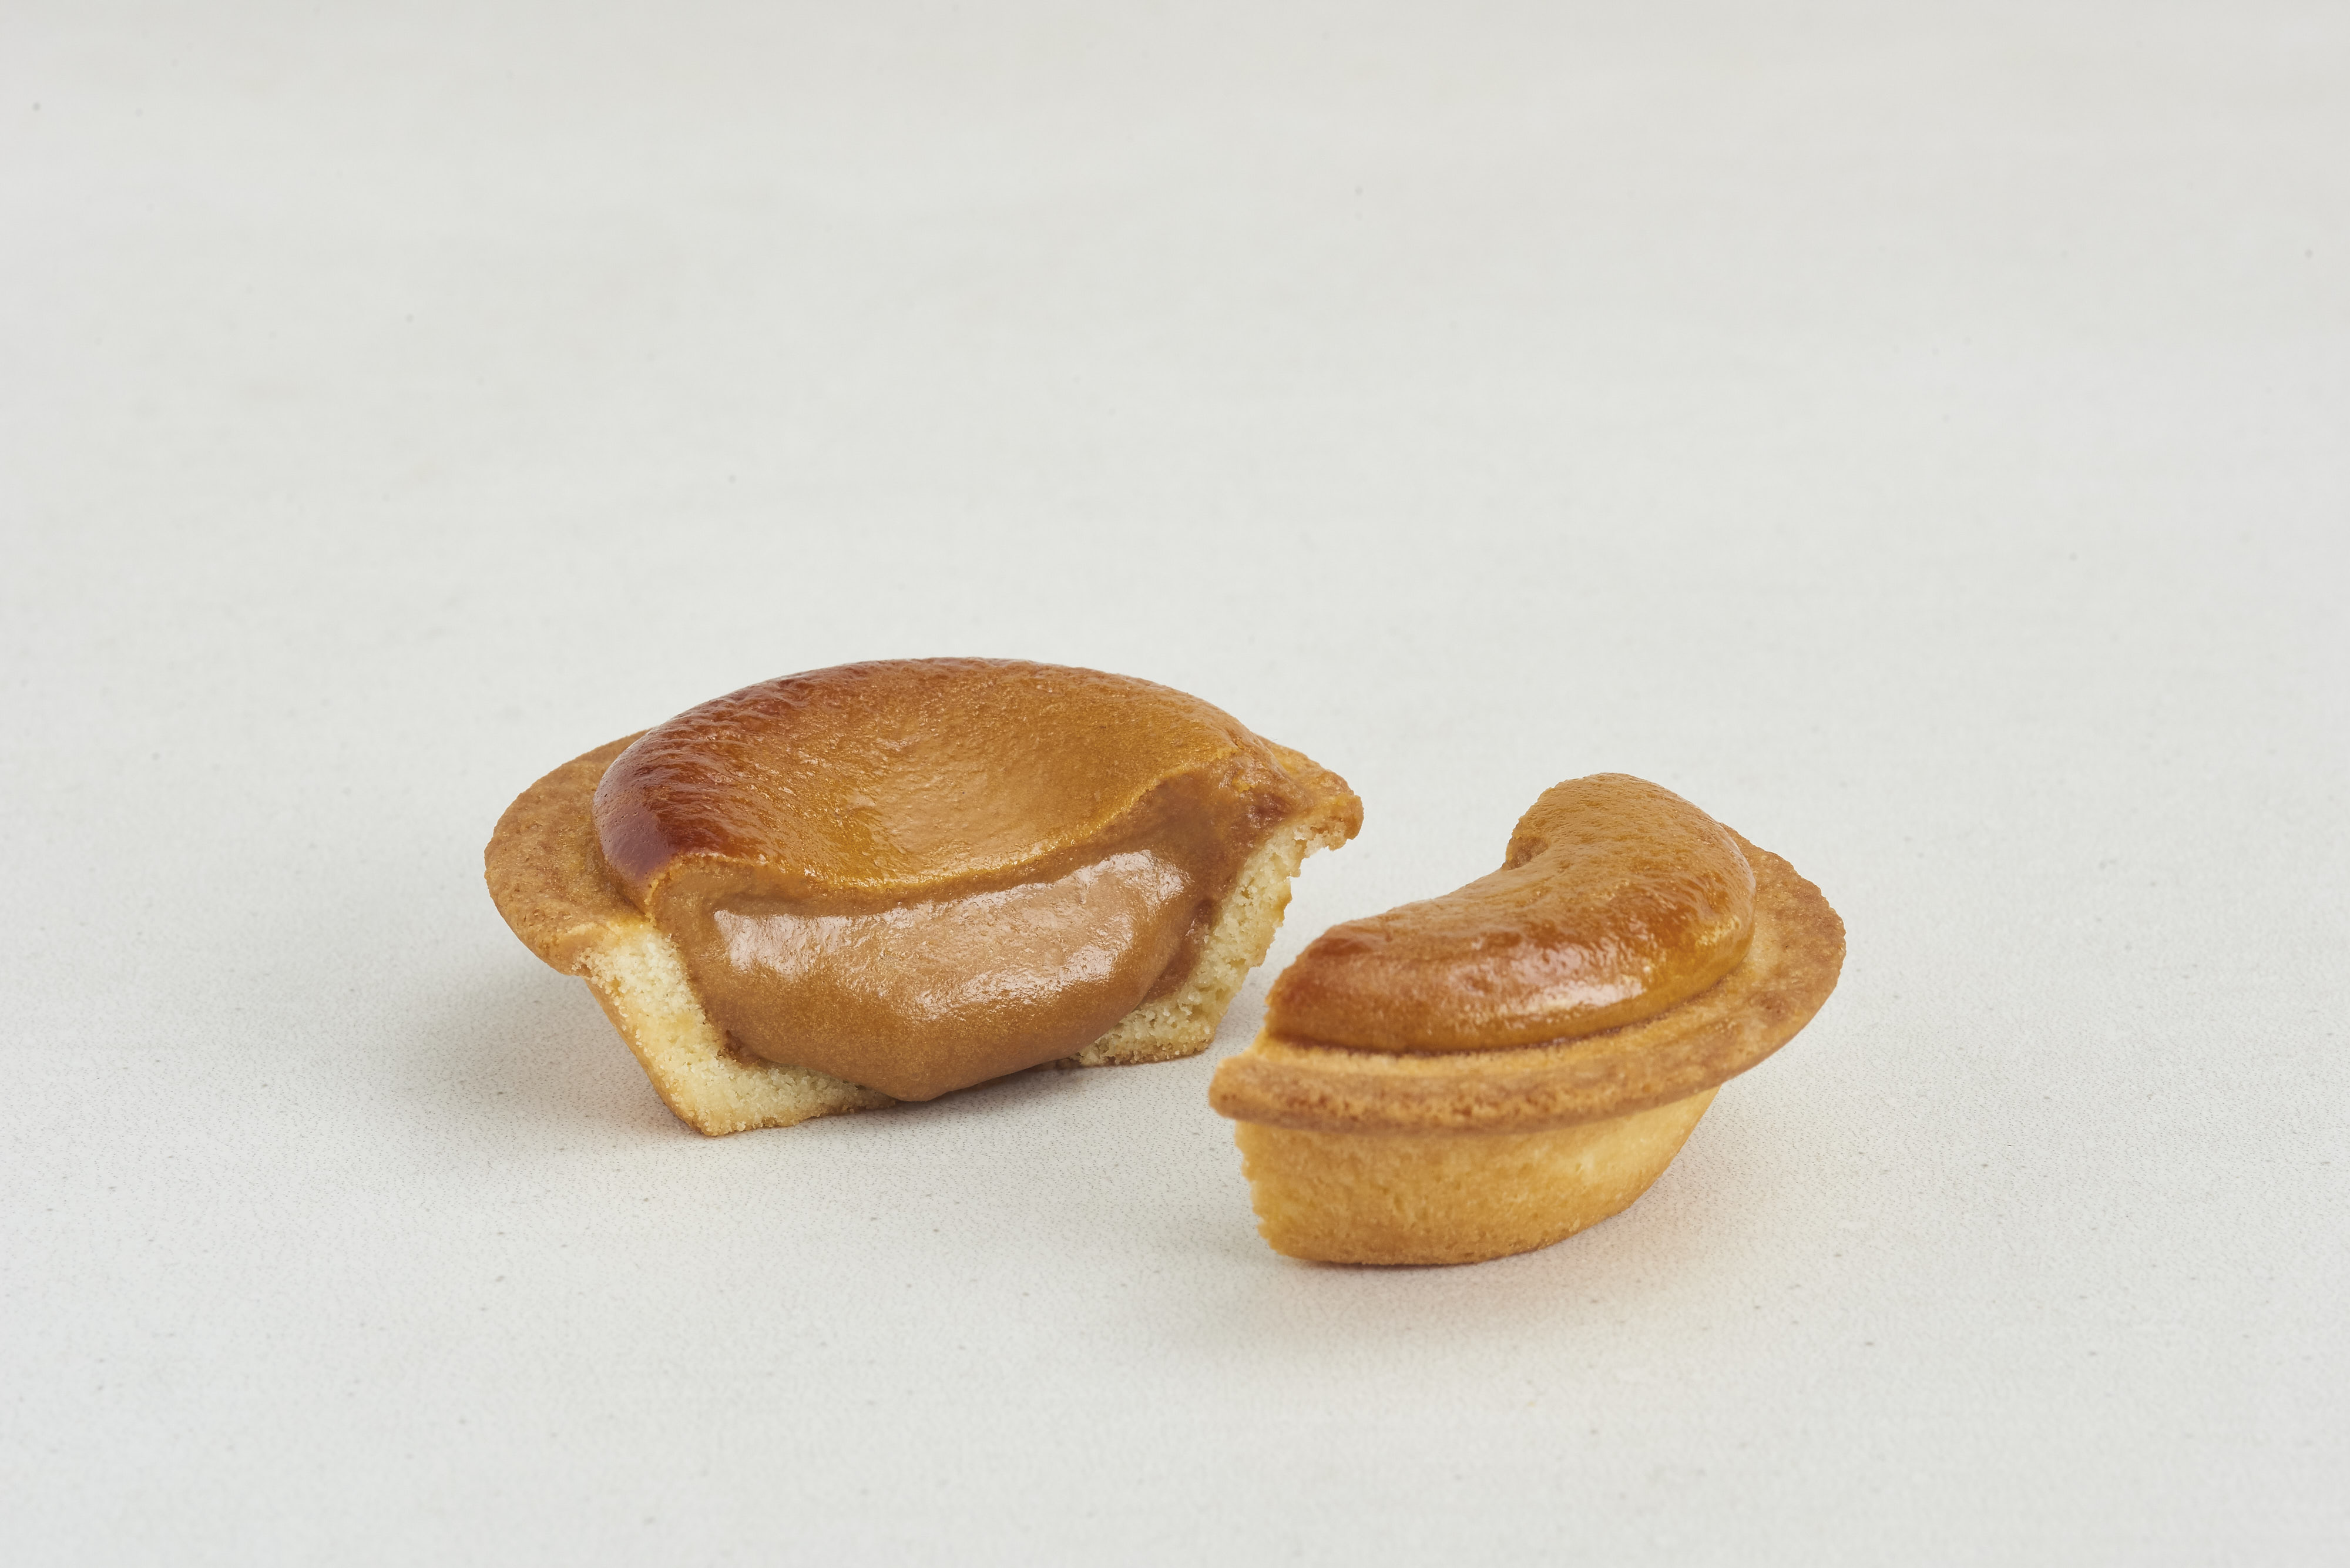 freshly-baked-caramel-cheese-tart-%e7%84%bc%e3%81%8d%e3%81%9f%e3%81%a6%e3%82%ad%e3%83%a3%e3%83%a9%e3%83%a1%e3%83%ab%e3%83%81%e3%83%bc%e3%82%ba%e3%82%bf%e3%83%ab%e3%83%885-2